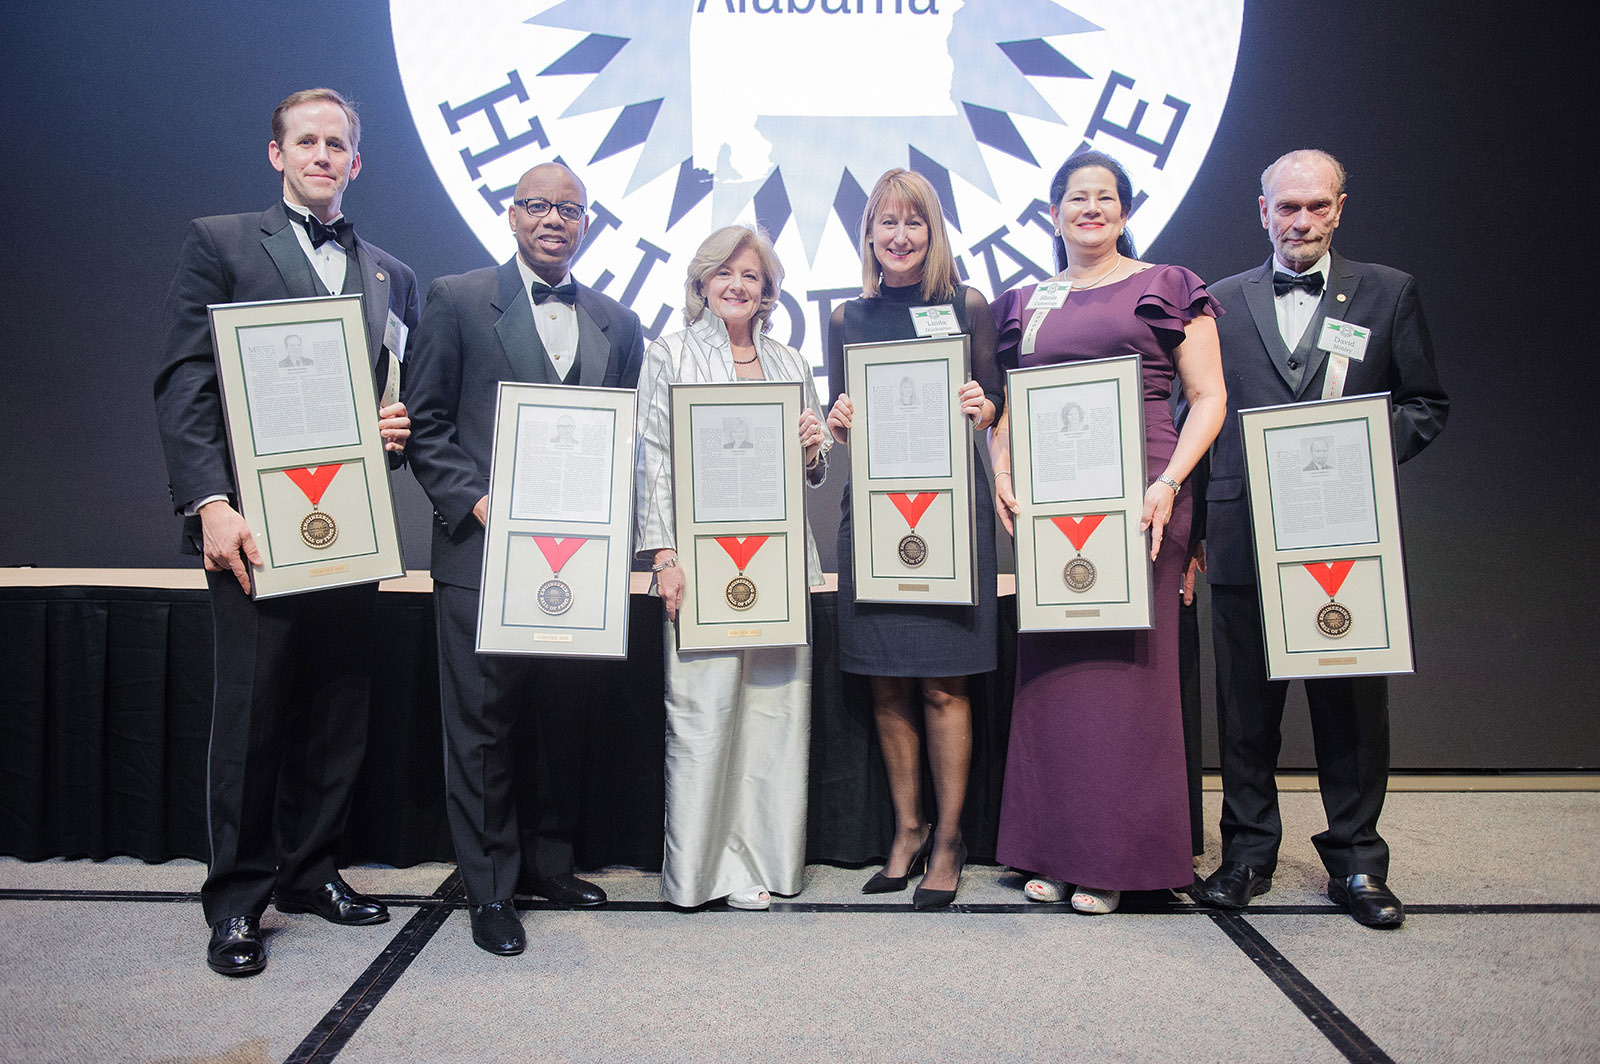 6 people in formal wear holding awards